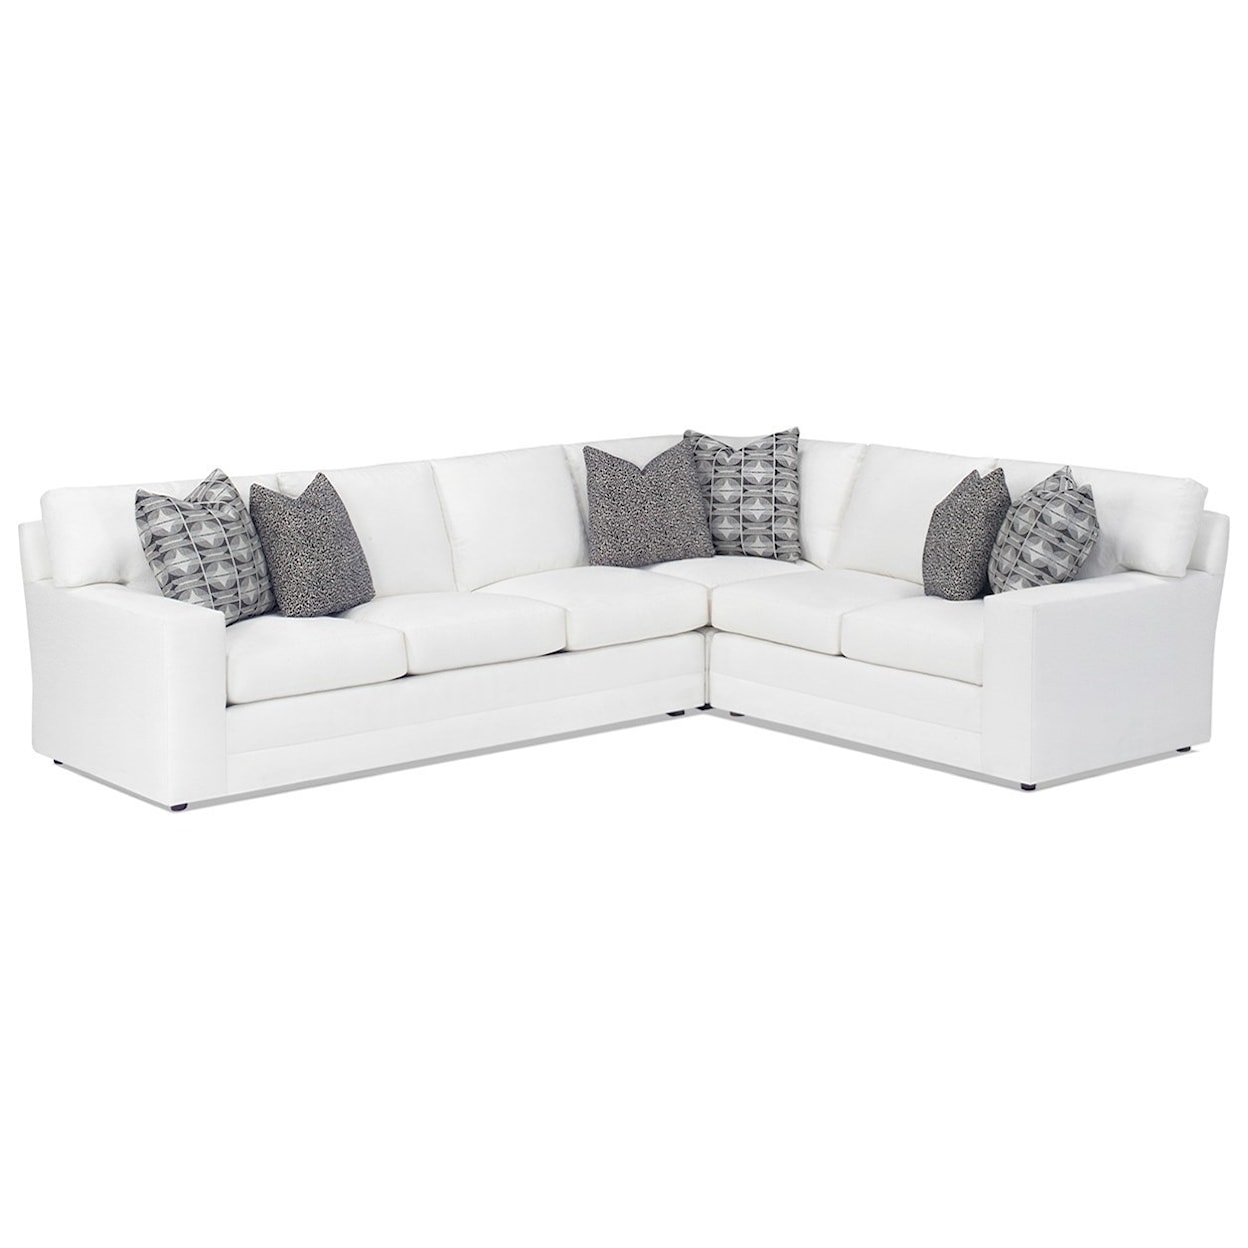 Lexington Personal Design Series Customizable Bedford 3 Pc Sectional Sofa